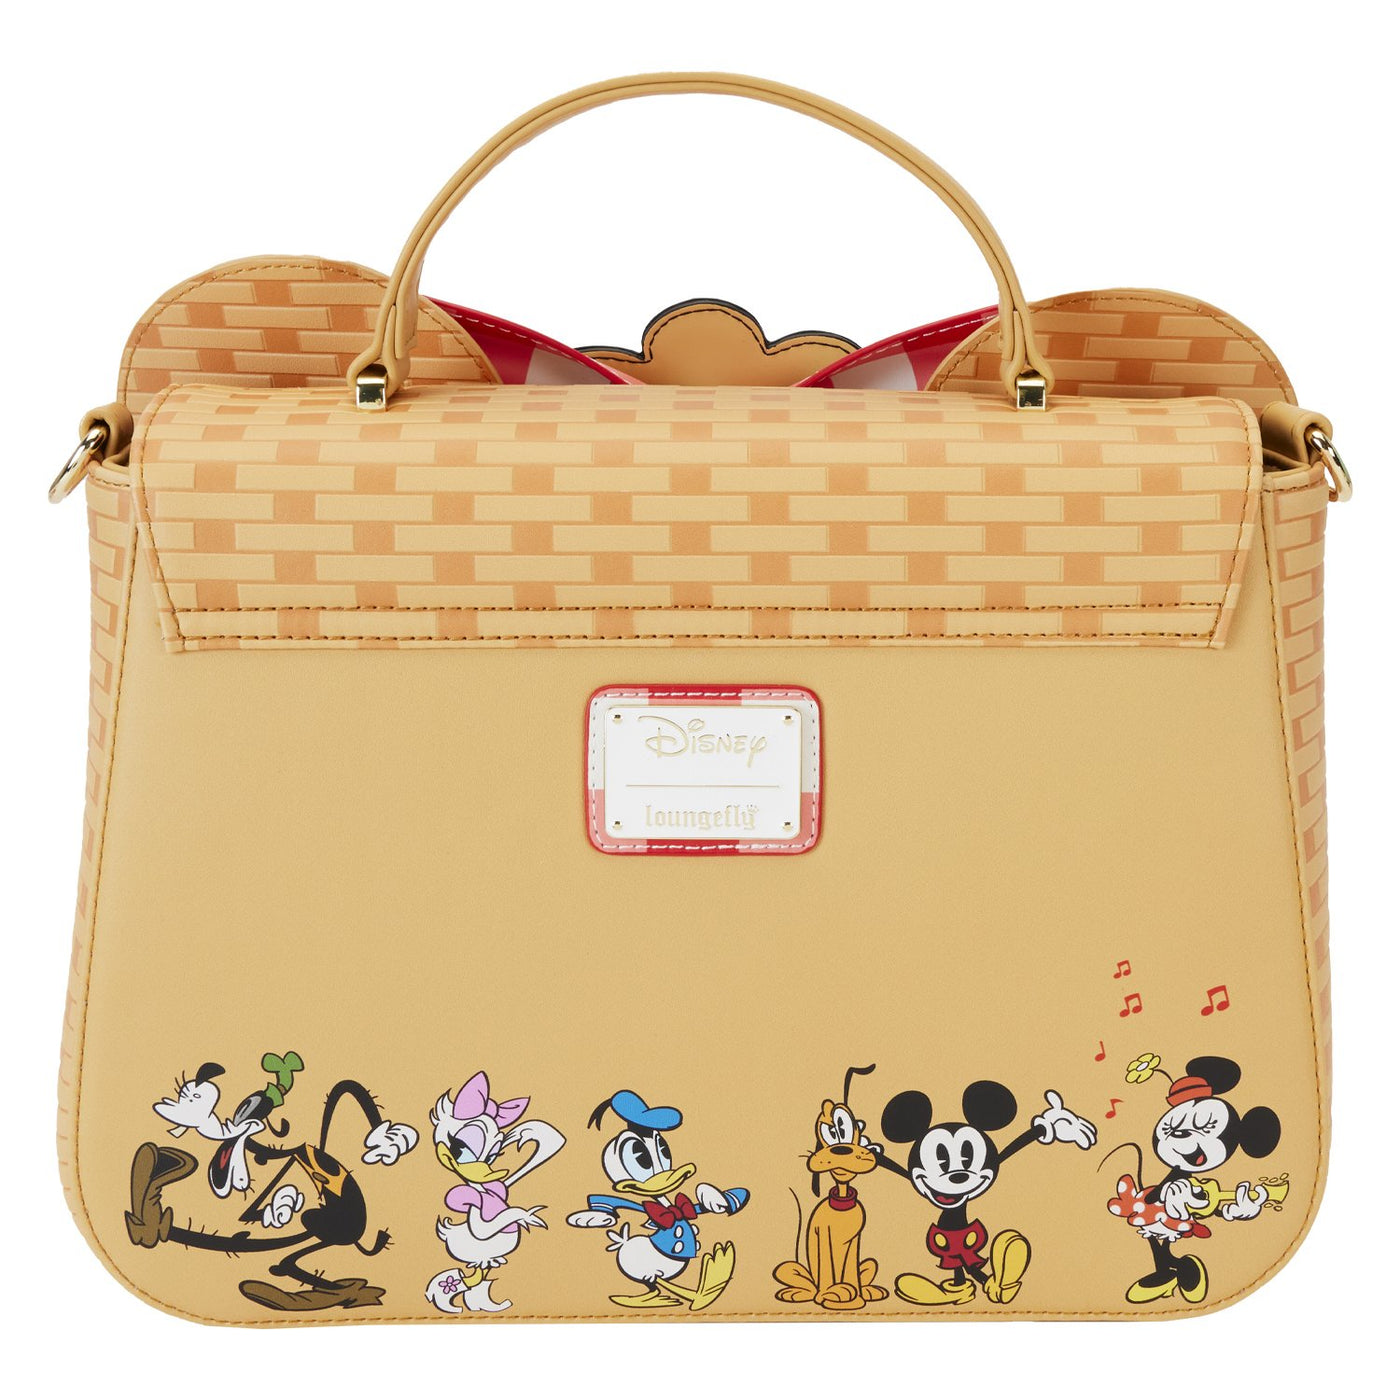 Loungefly Disney Minnie Mouse Picnic Basket Crossbody - Back